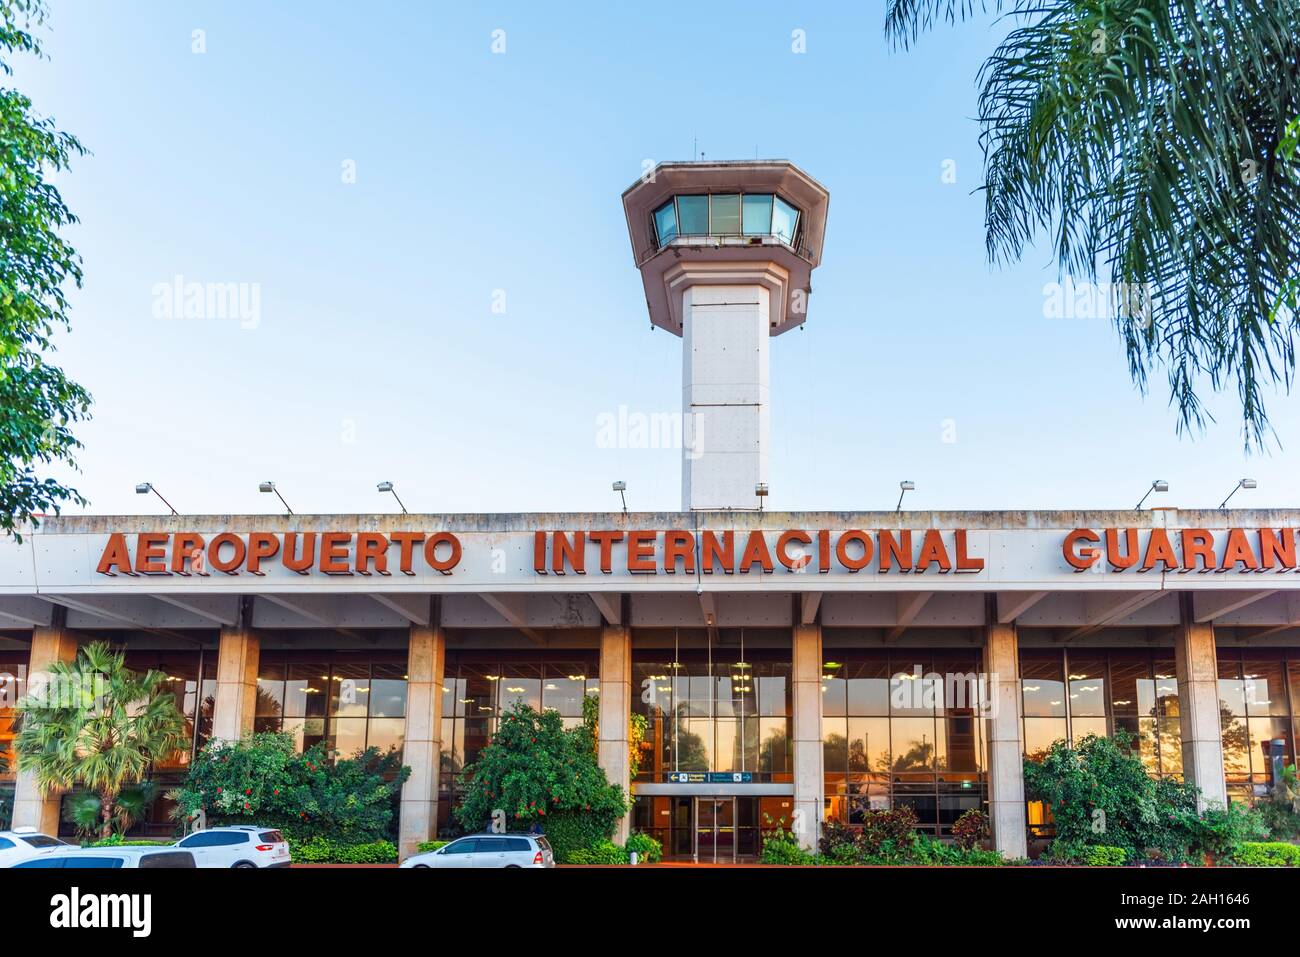 ASUNCION, PARAGUAY - JUNE 24, 2019: Facade of the international airport building Stock Photo